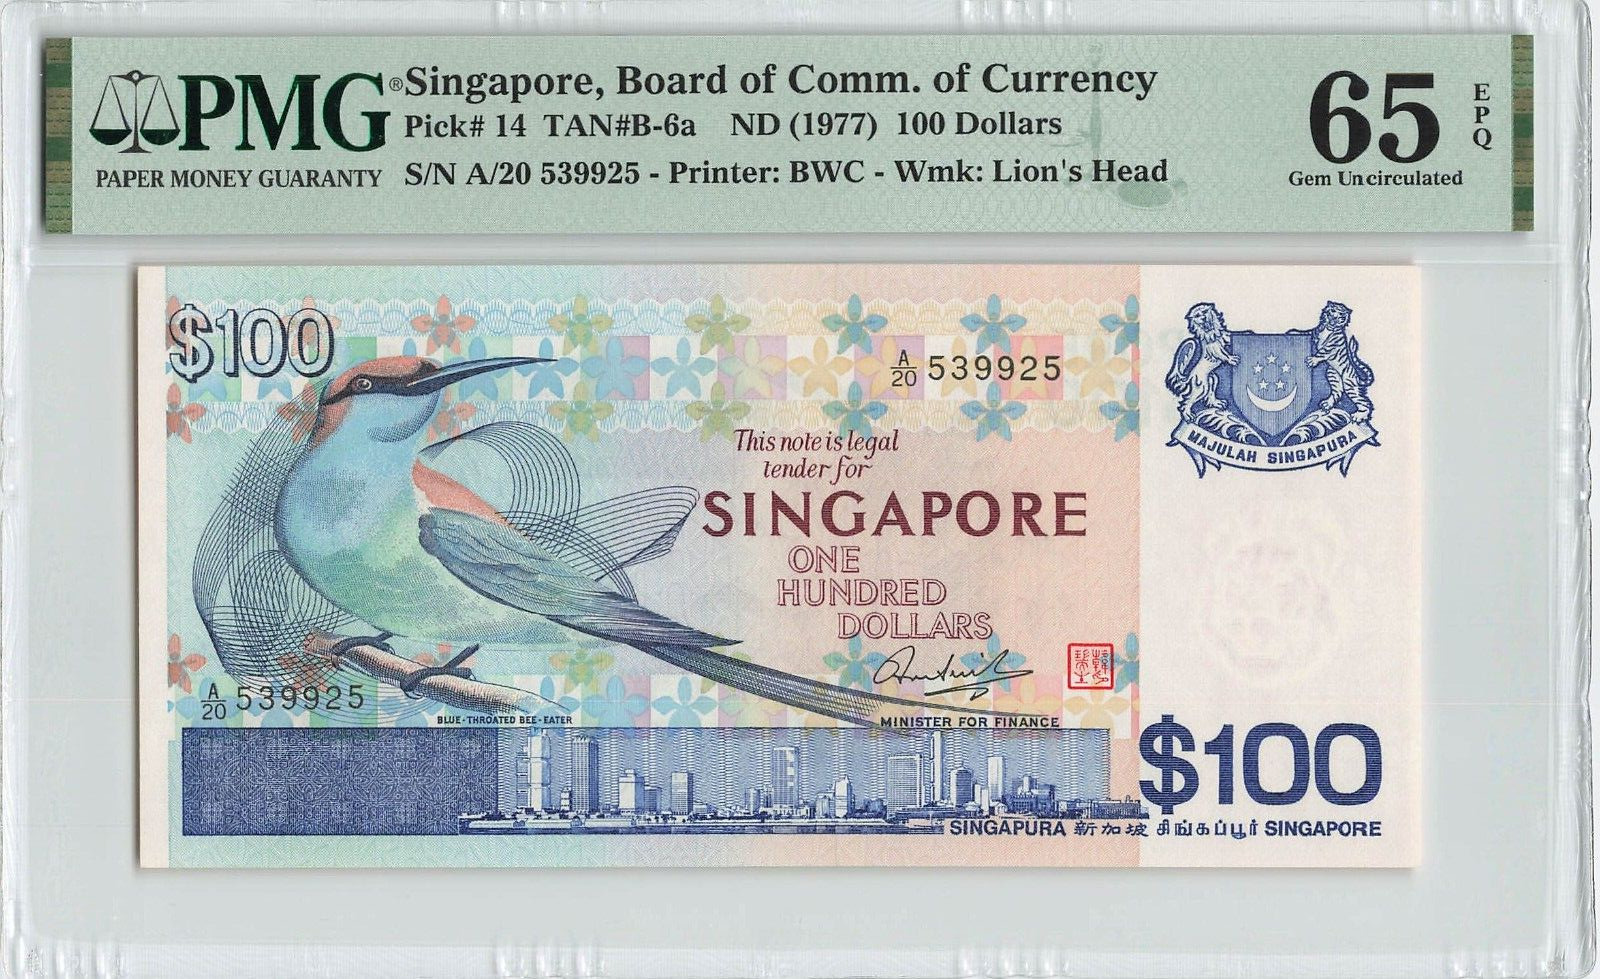 Singapore $100 Dollars 1977, P-14 Tan B-6a, Bird Series, Pmg 65 Epq Gem Unc A/20